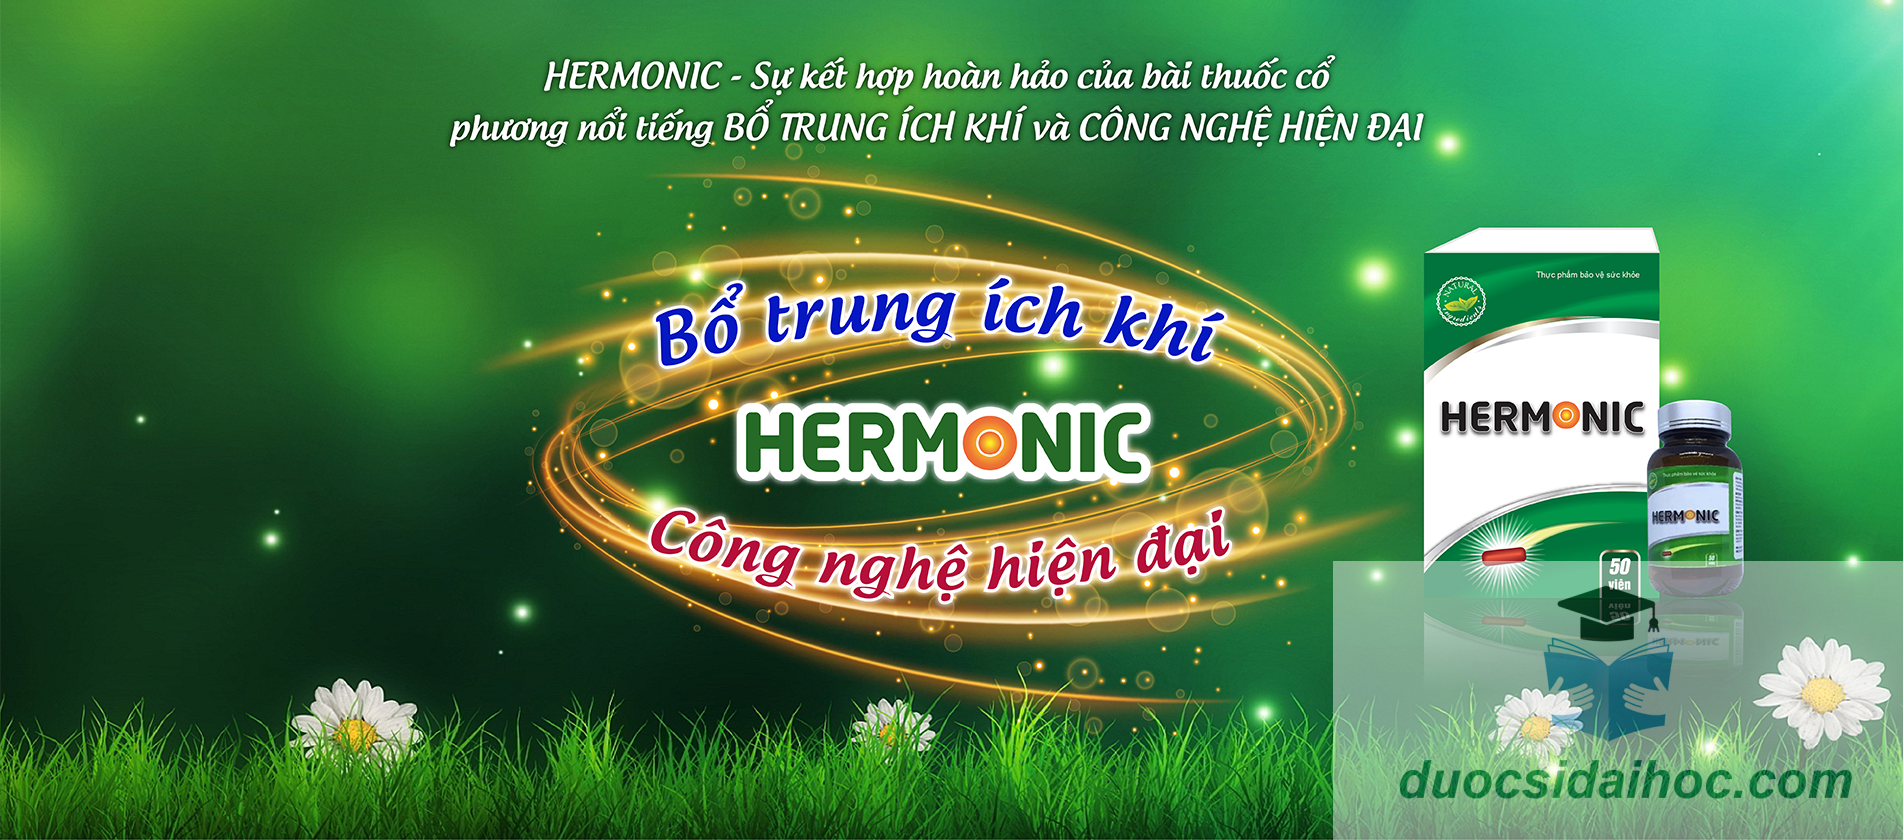 hermonic 